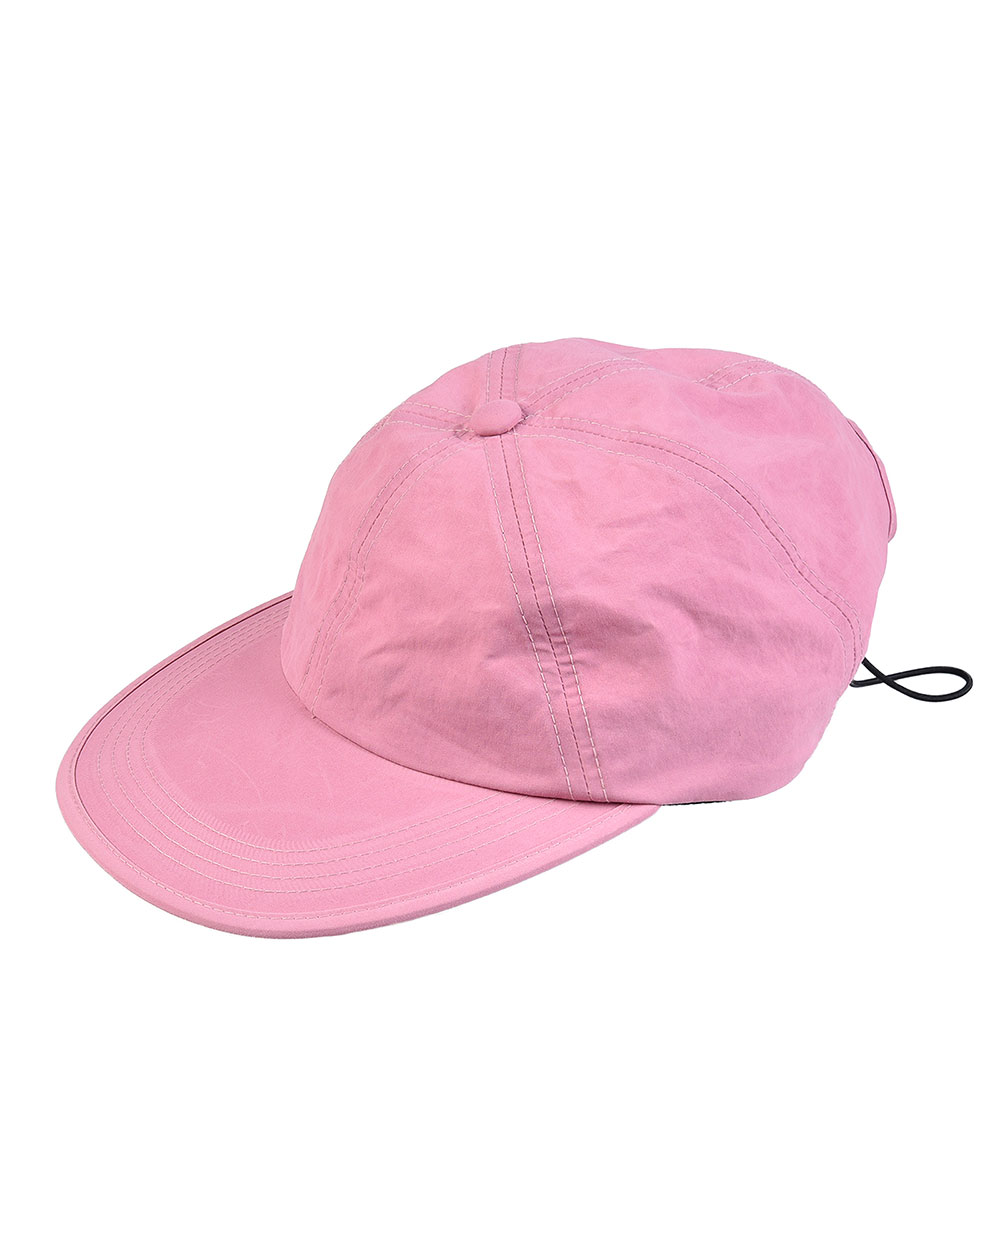 aeae Taslan Nylon Utility Cap (Vintage Pink) *RESTOCK*